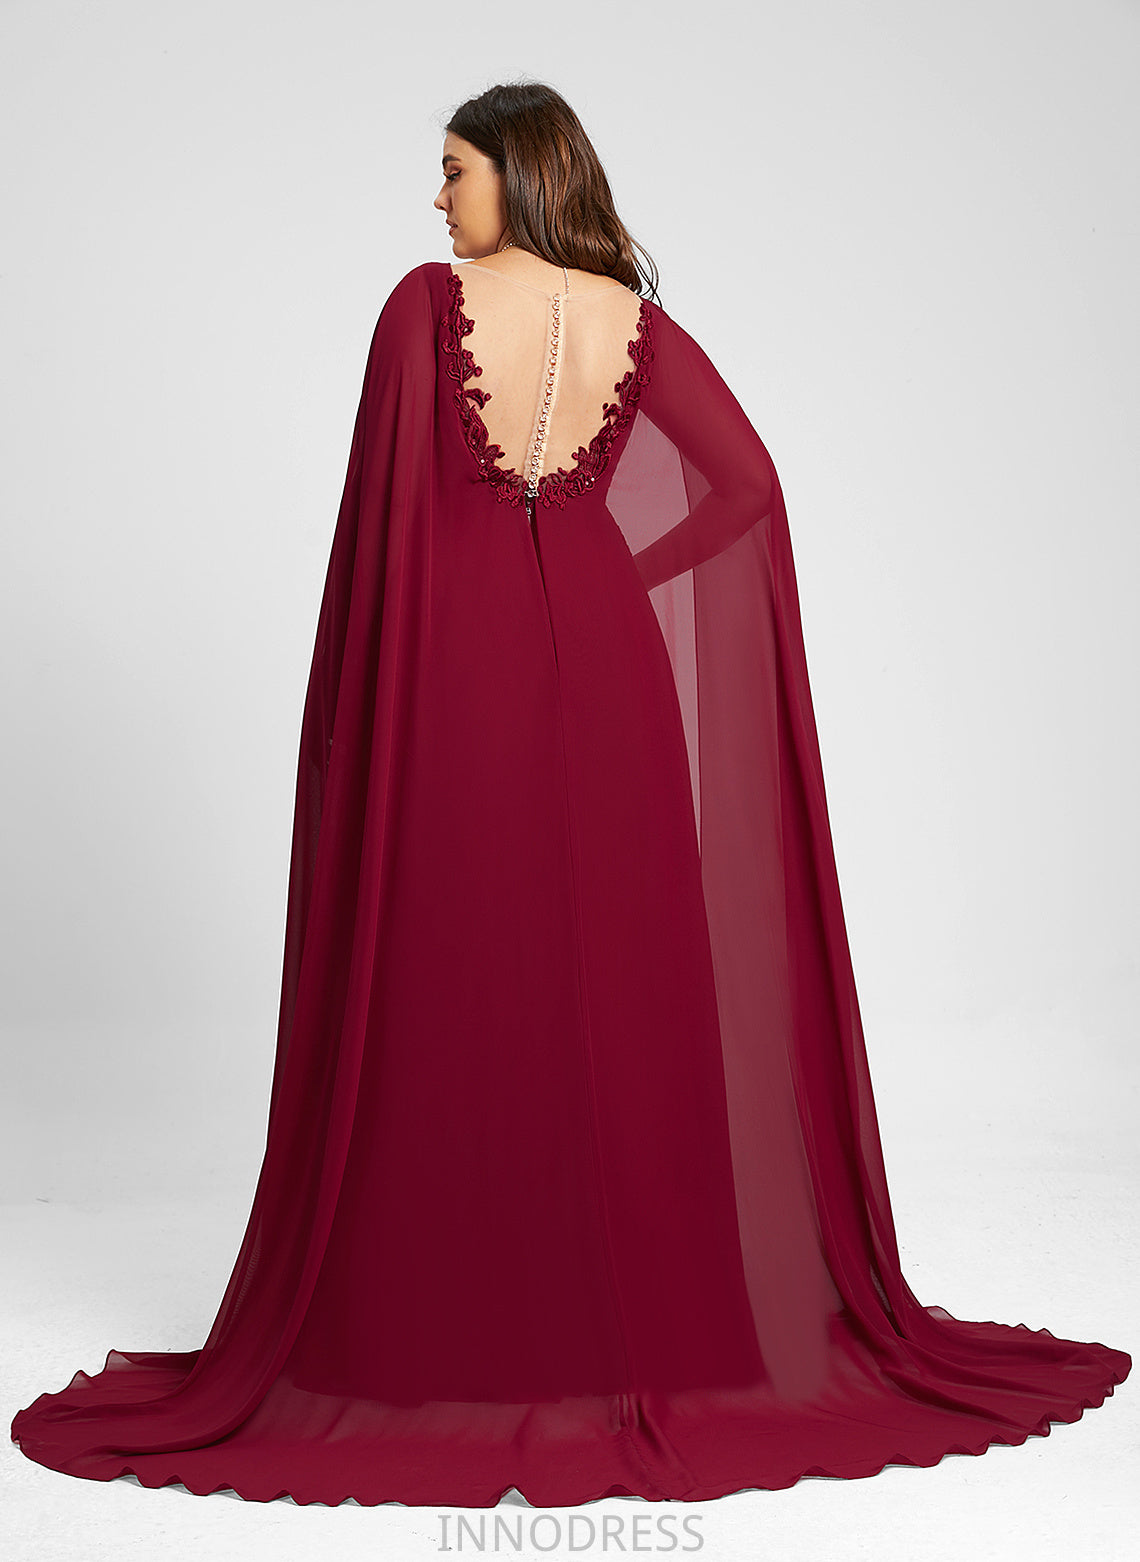 Dress Wedding Chiffon A-Line Wedding Dresses Floor-Length Lace V-neck Sequins Lilyana With